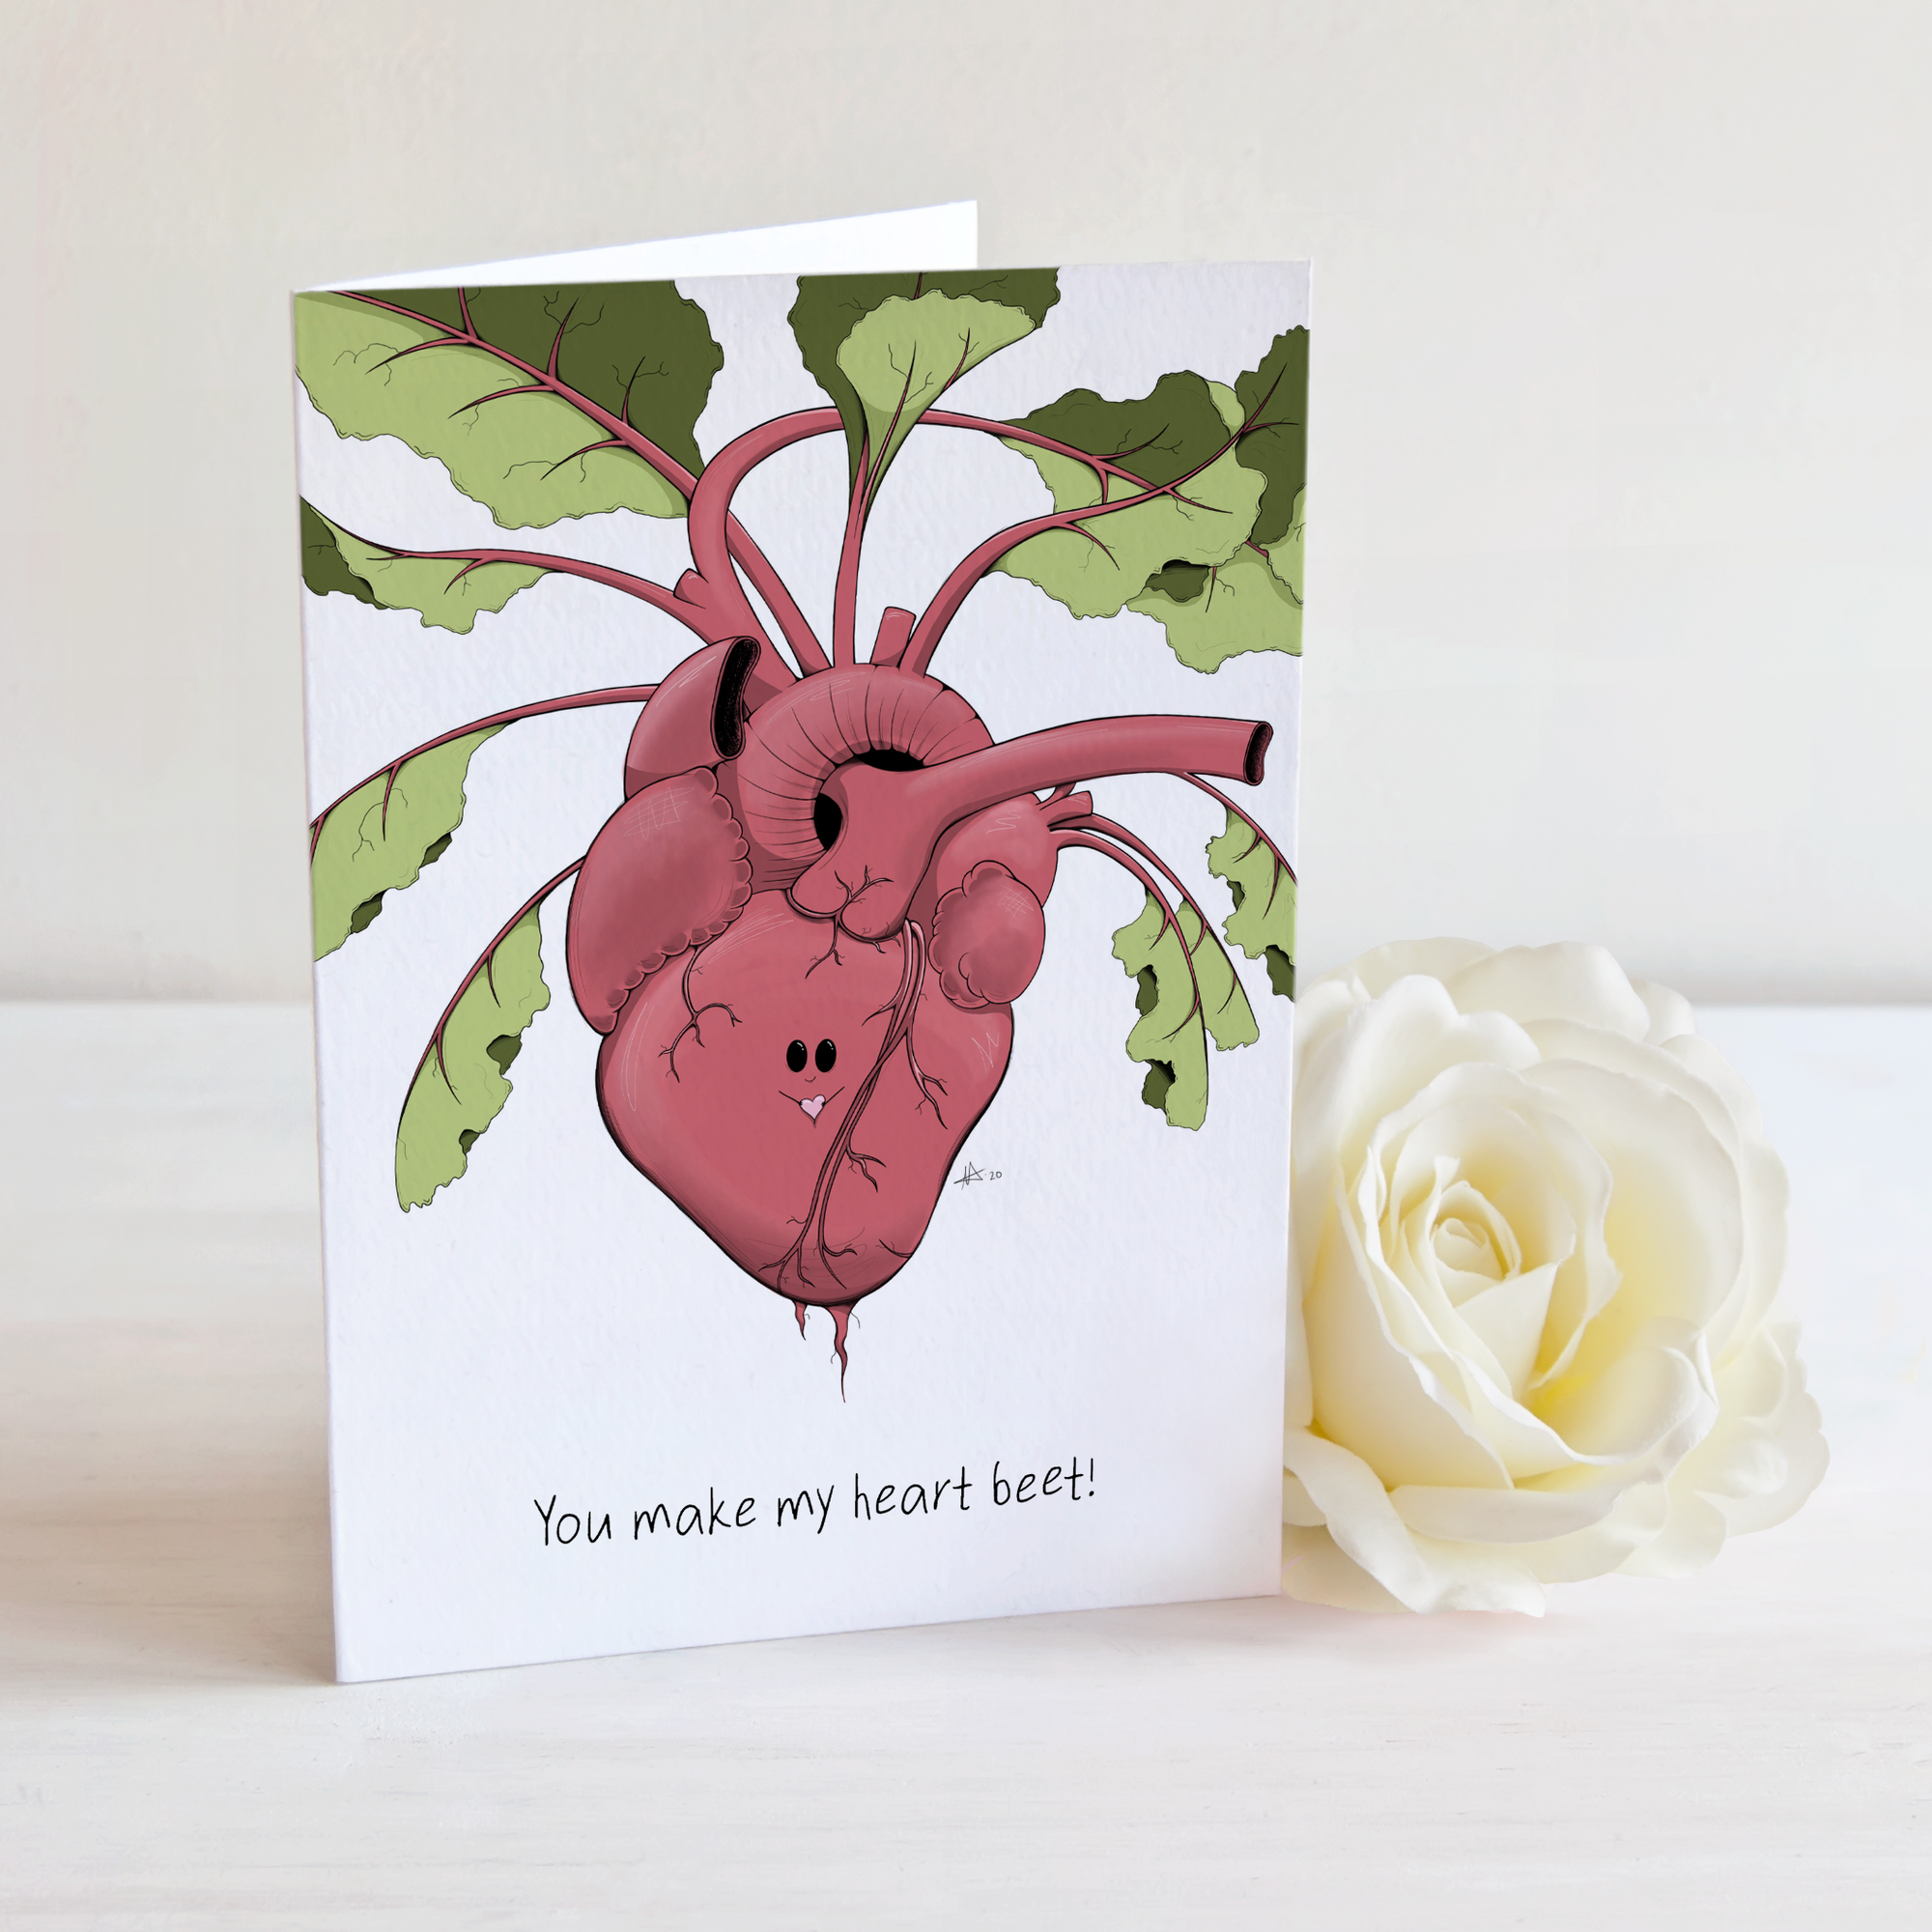 "You make my heart beet!" - Greeting Card / Small Print